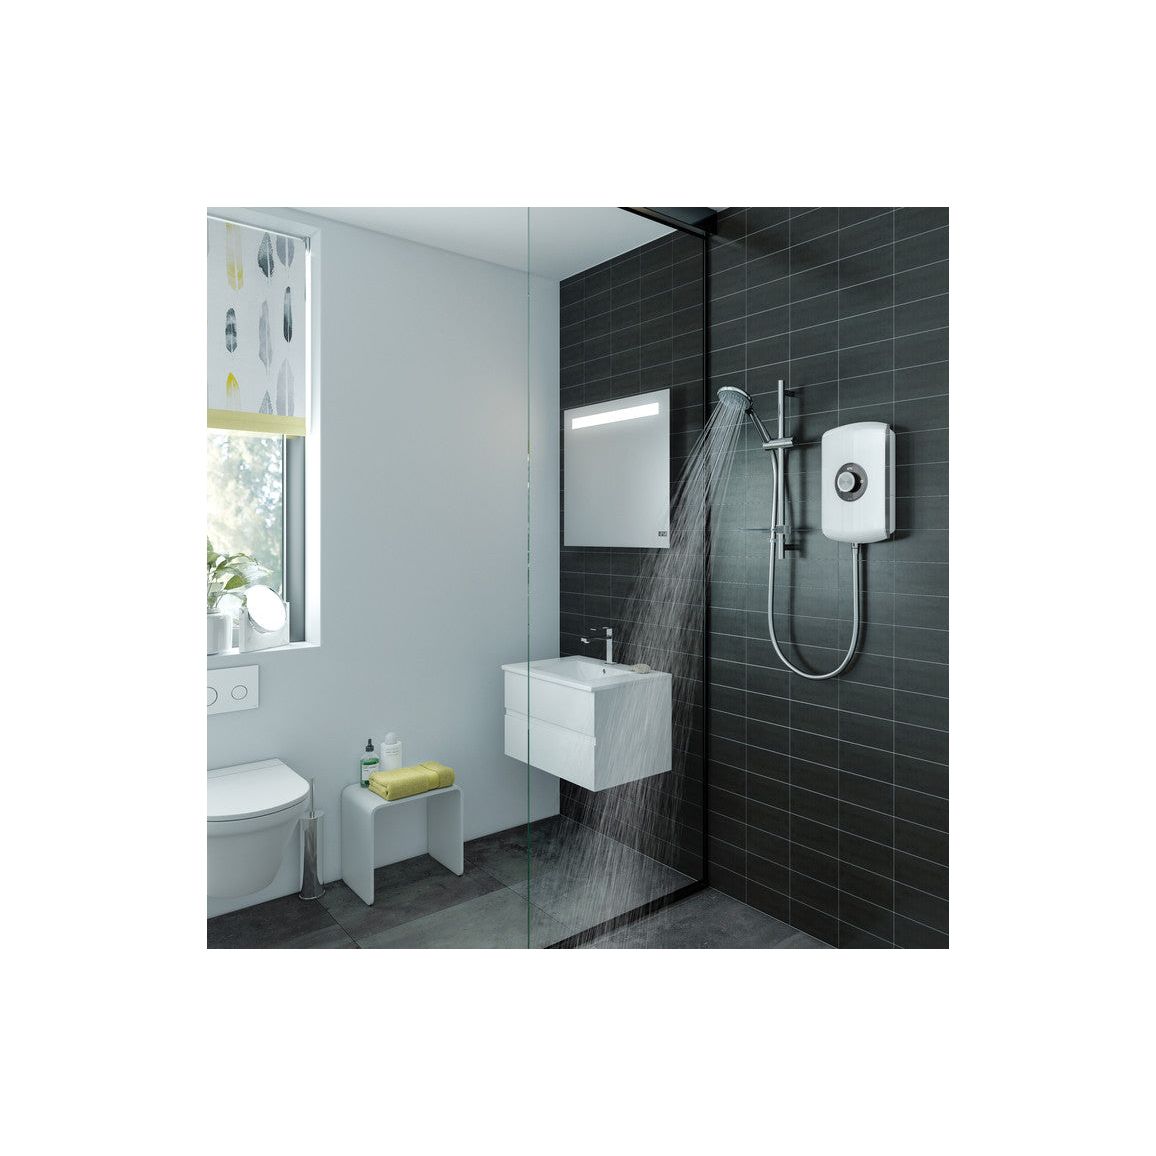 Triton Amore 9.5kW Electric Shower - Black Gloss